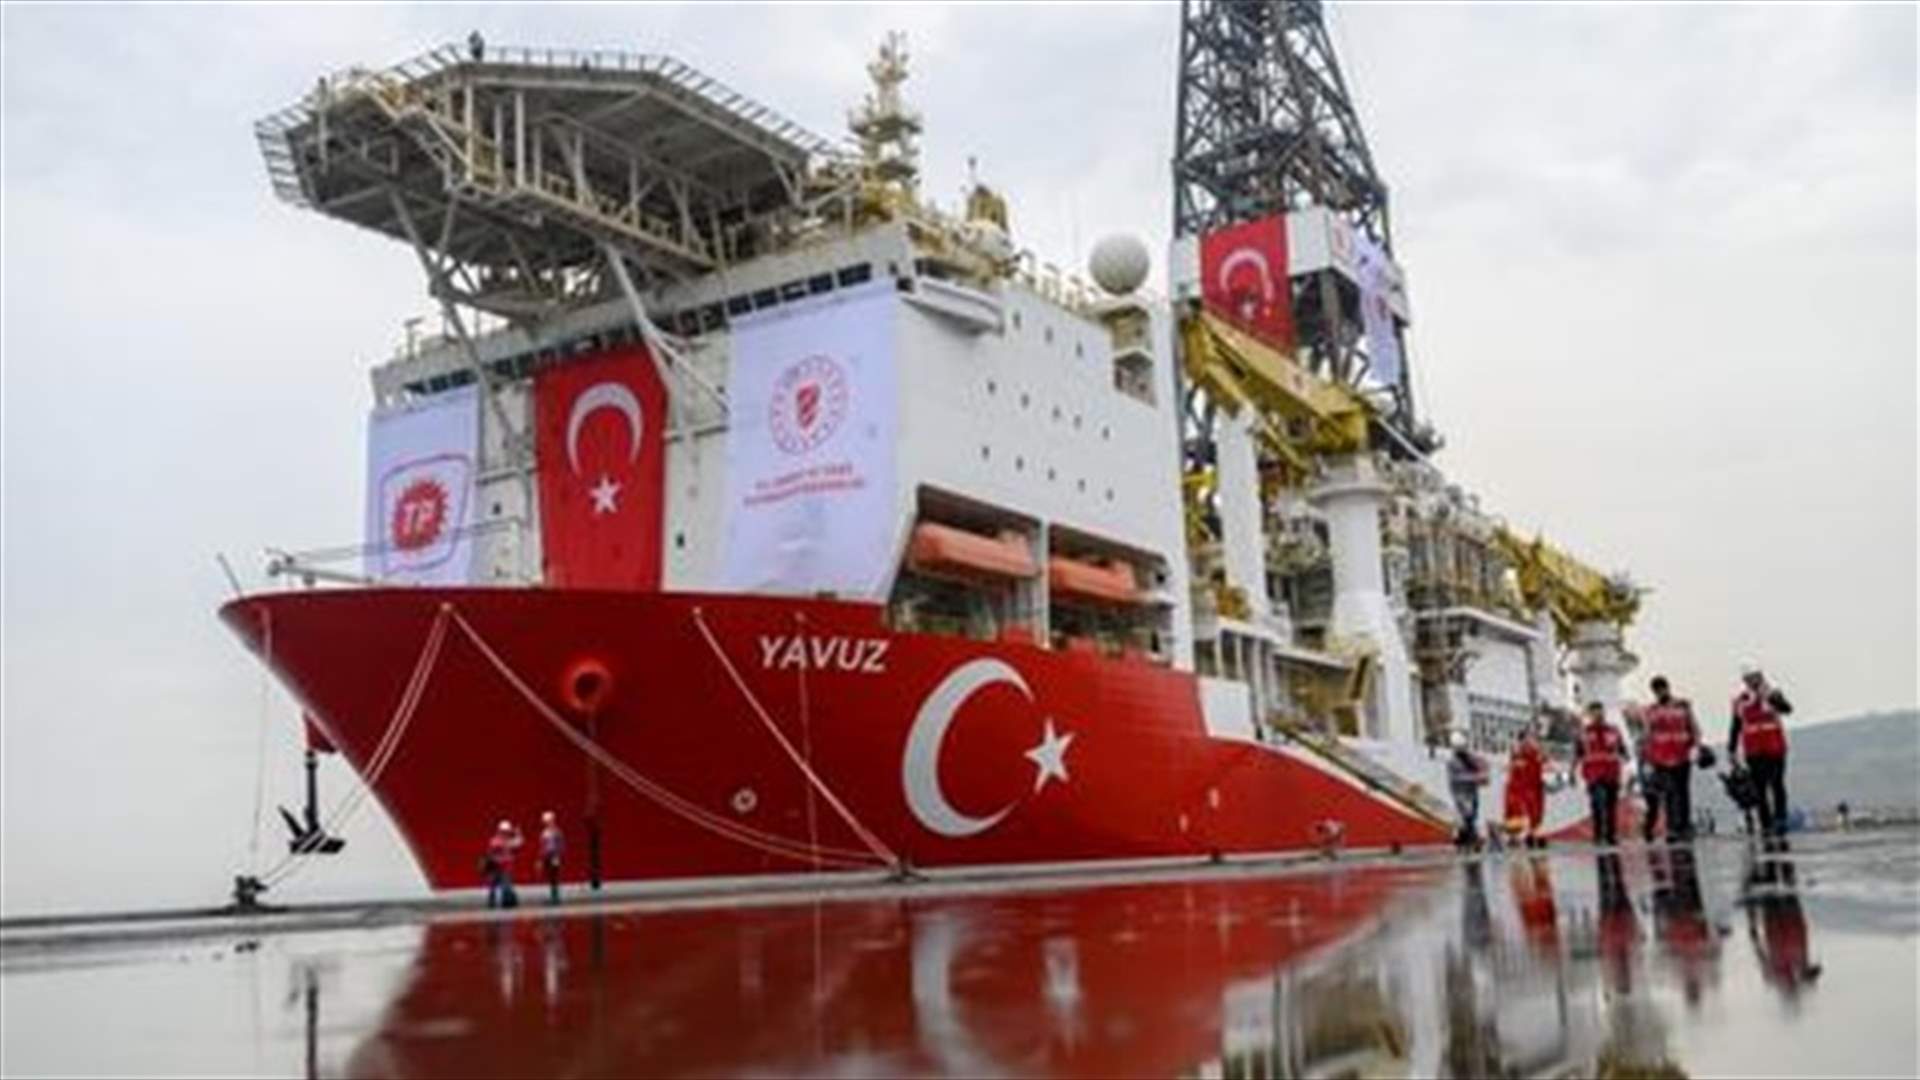 Turkey to send fourth ship to eastern Mediterranean -energy minister